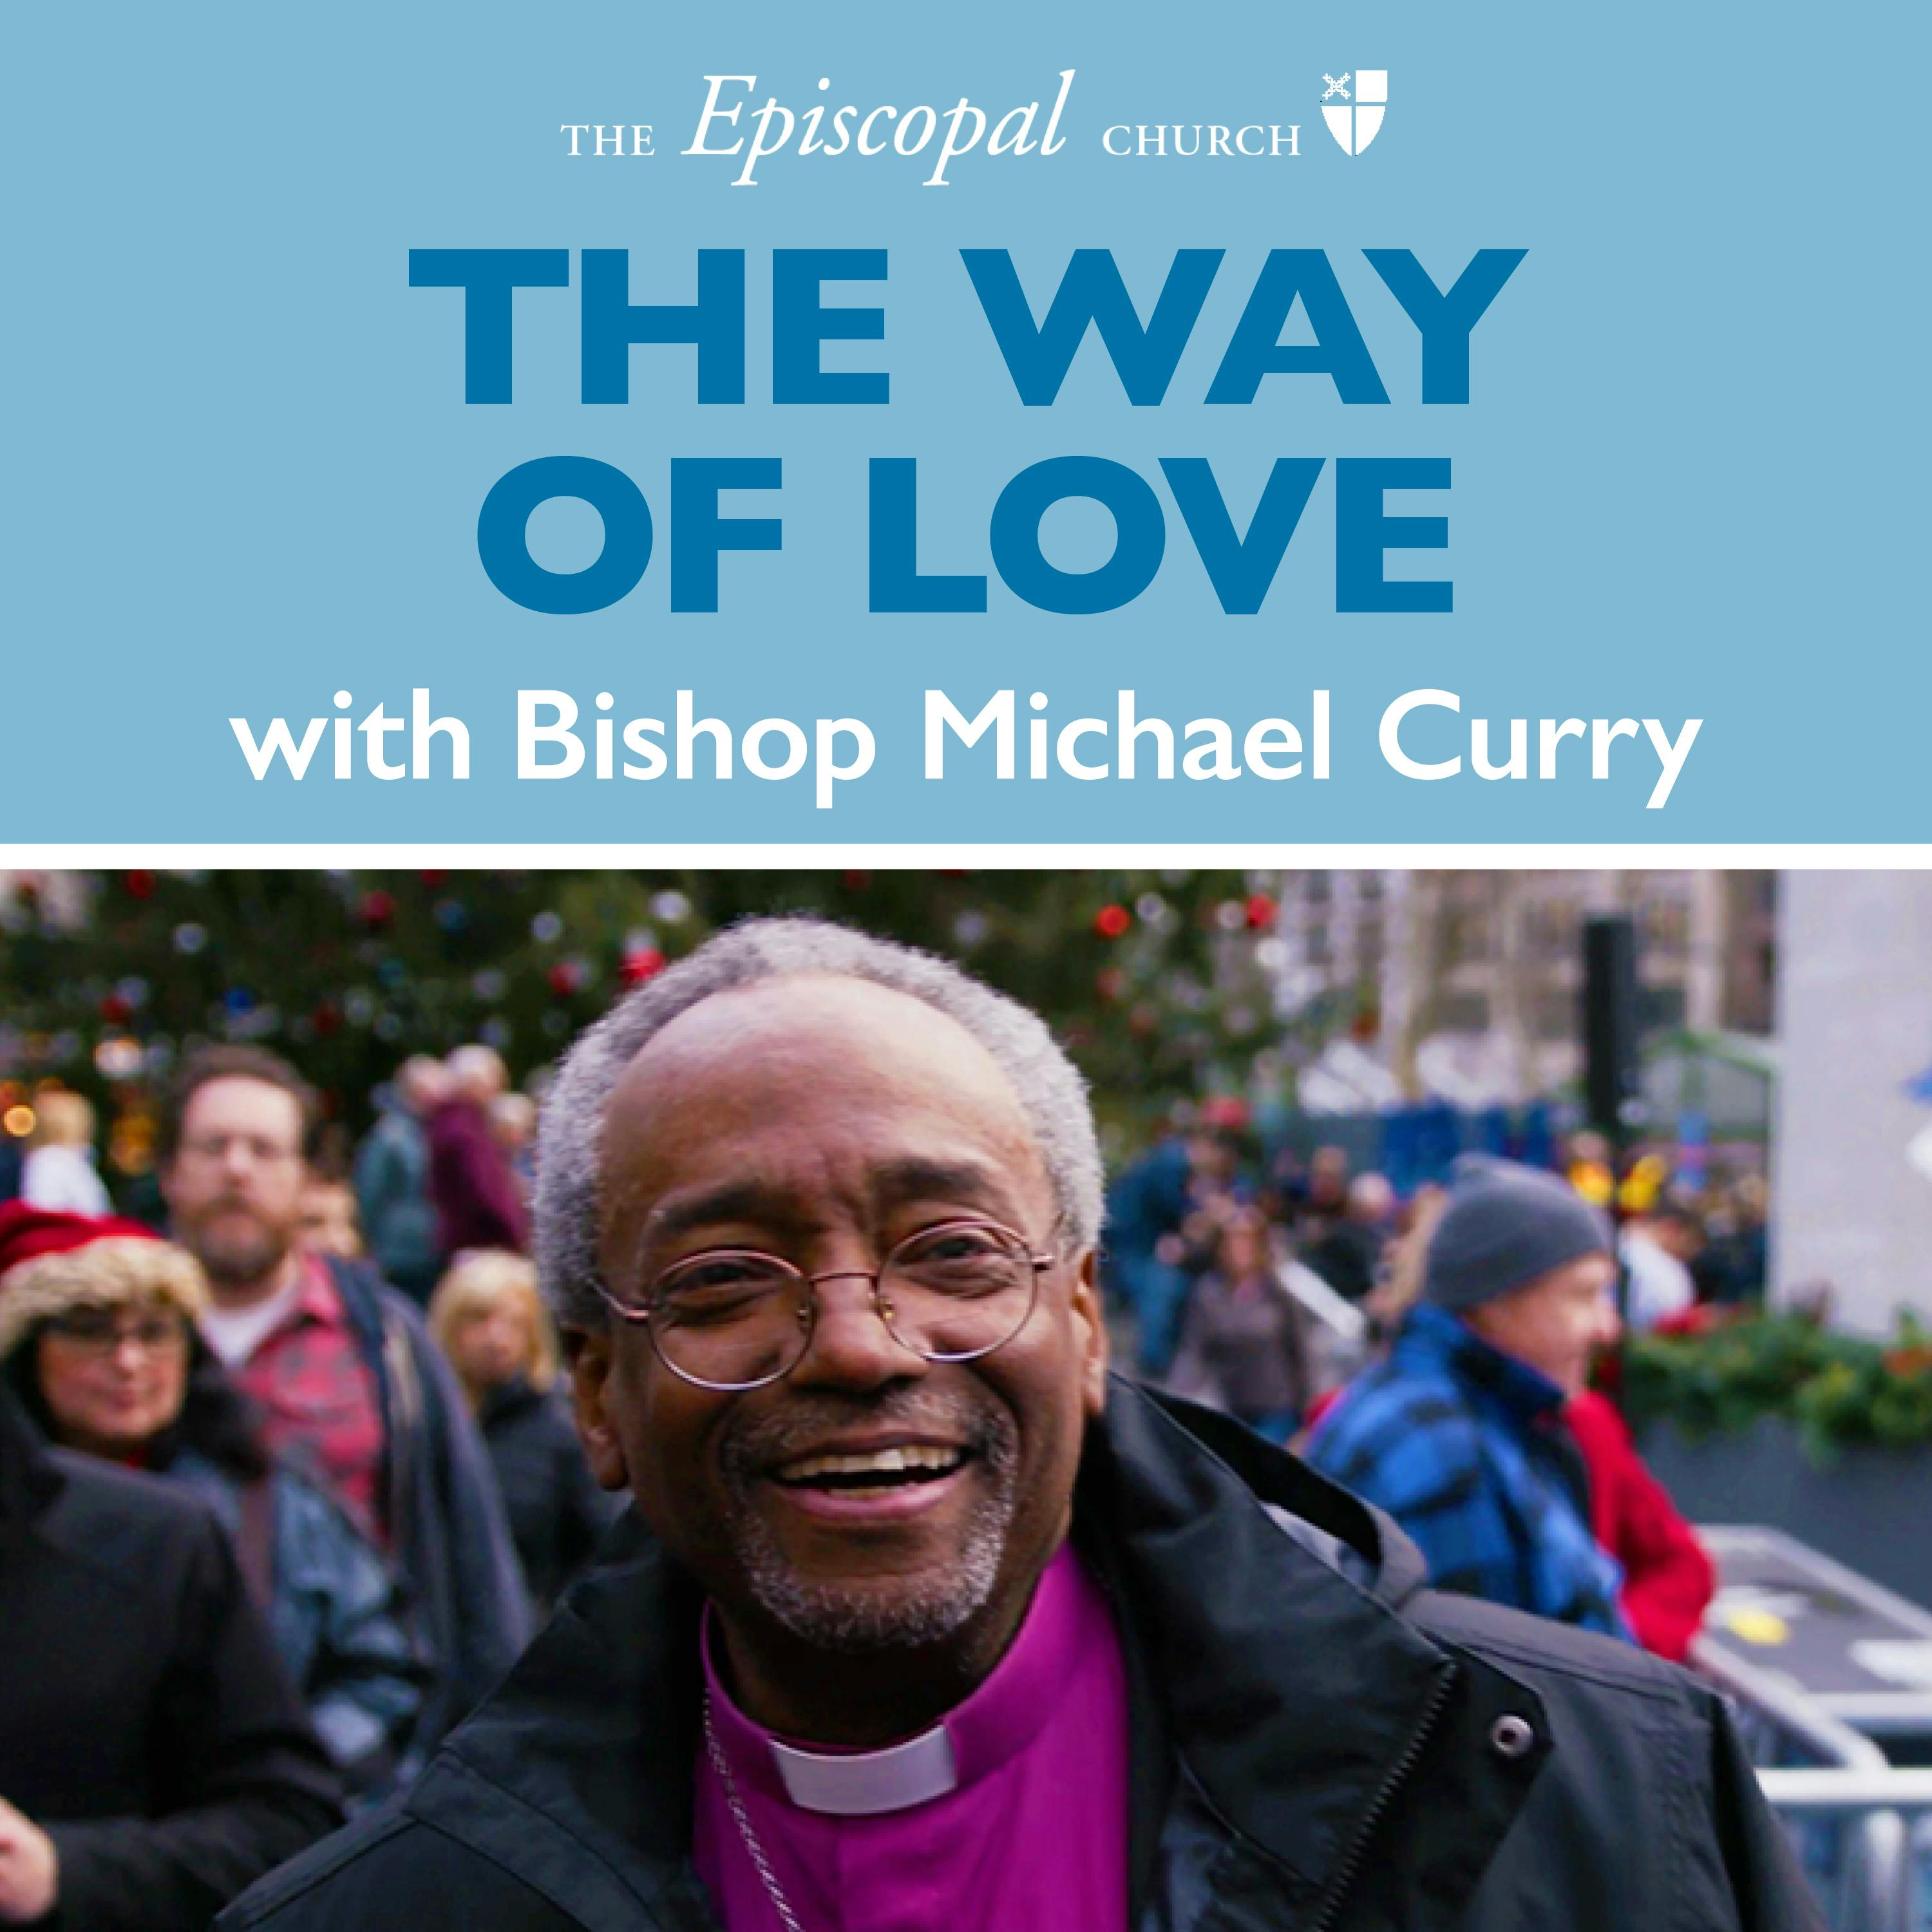 Bonus – Complete Bishop Curry sermon